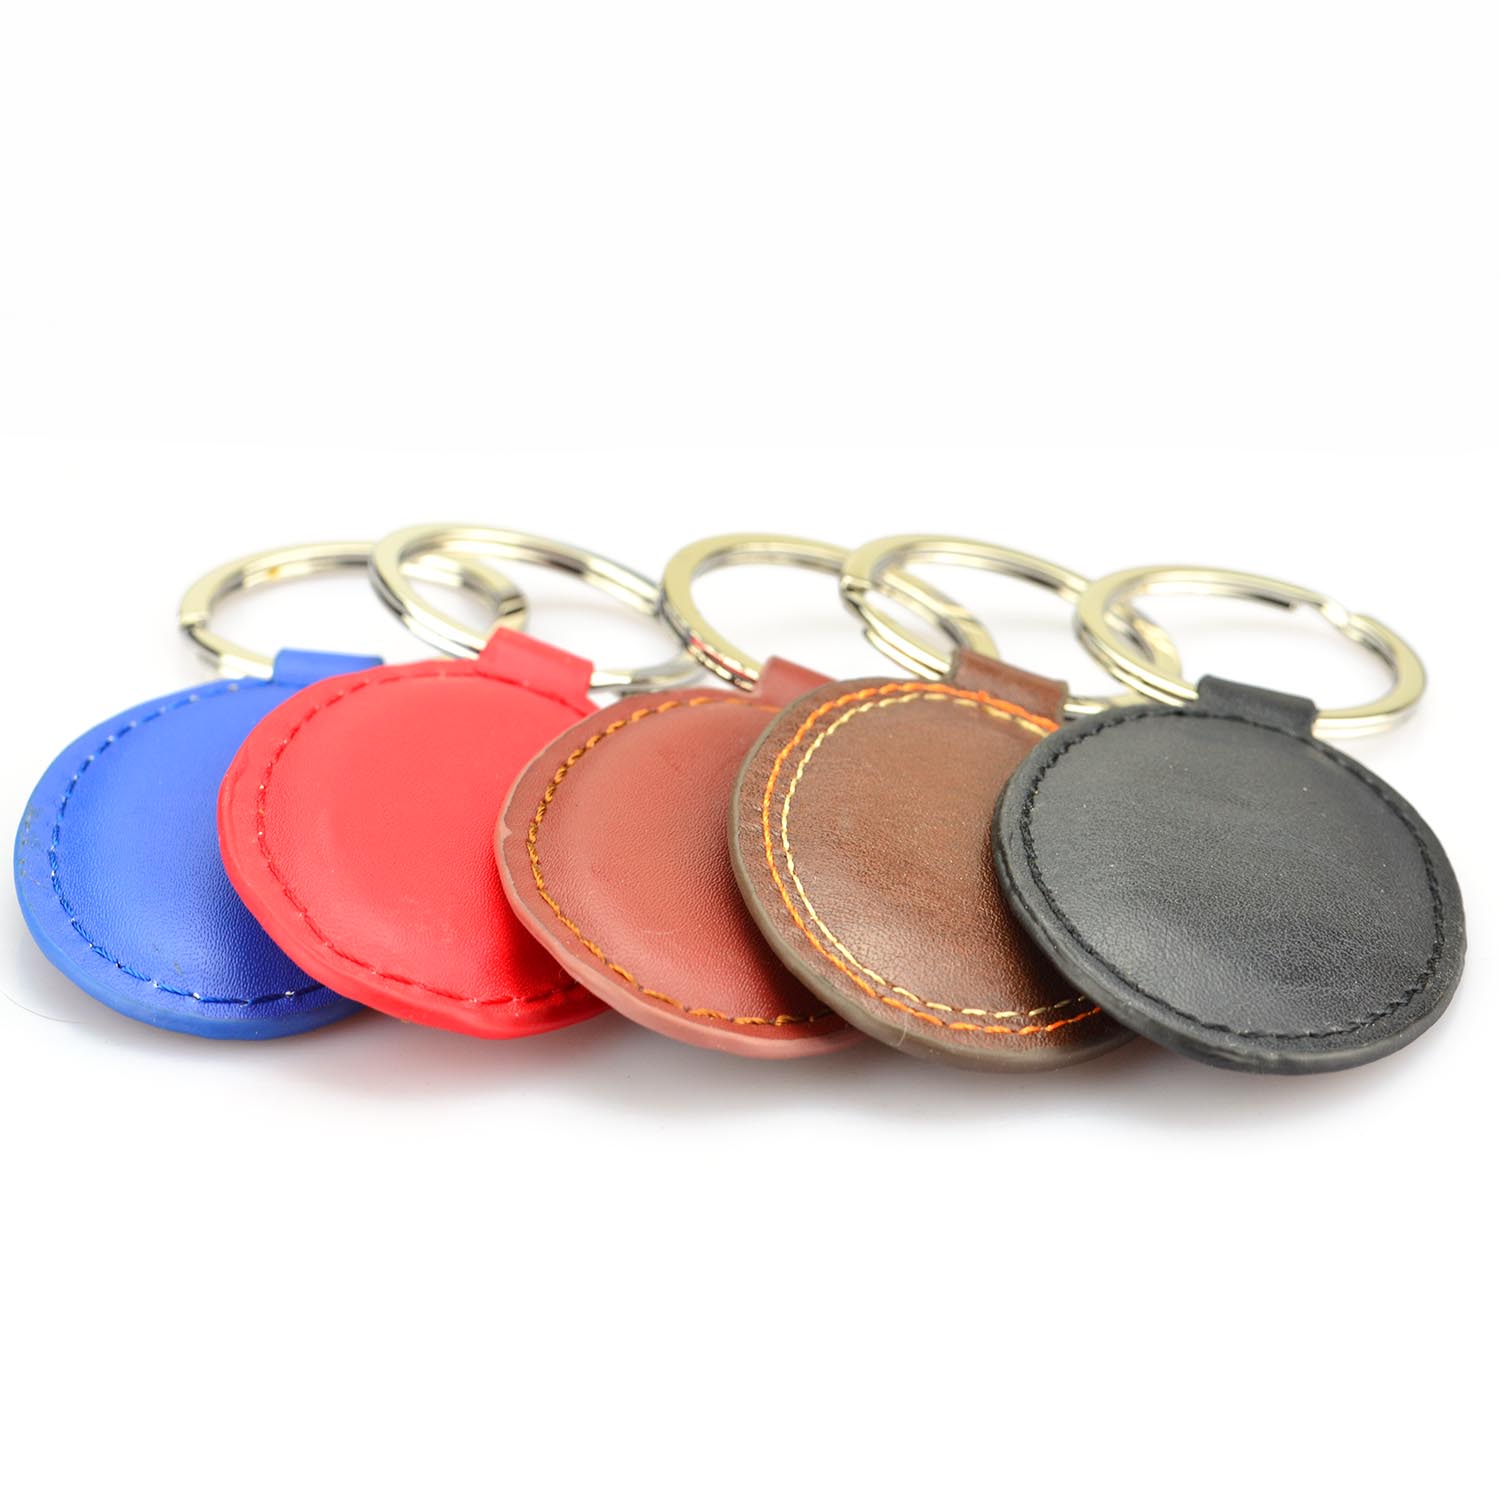 leather keychain-18007-5